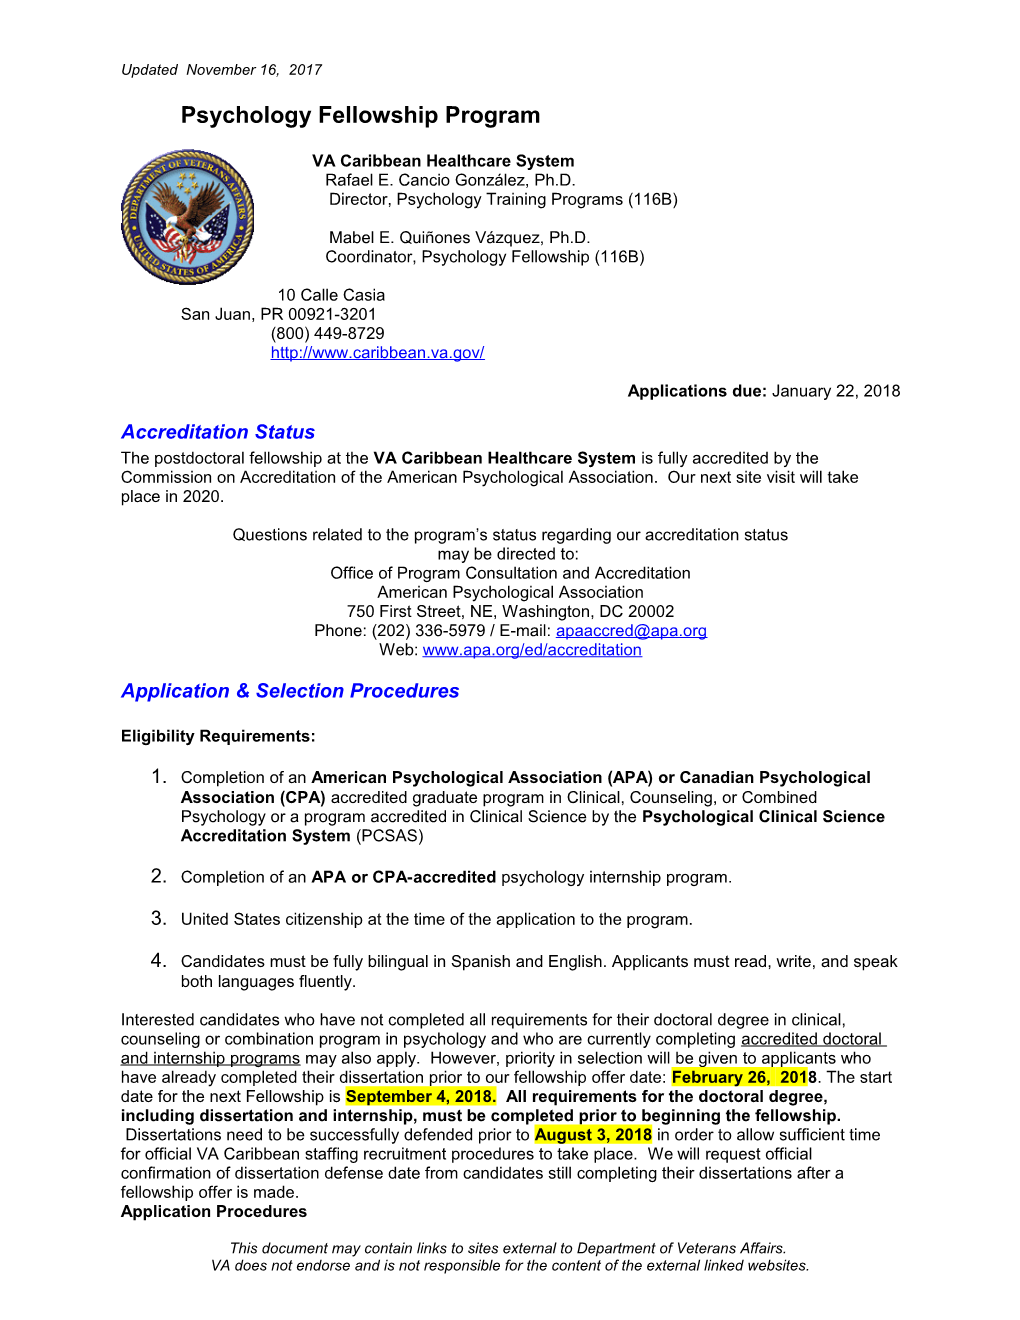 VA Caribbean Healthcare System Psychology Fellowship - VA - U.S. Department of Veterans Affairs